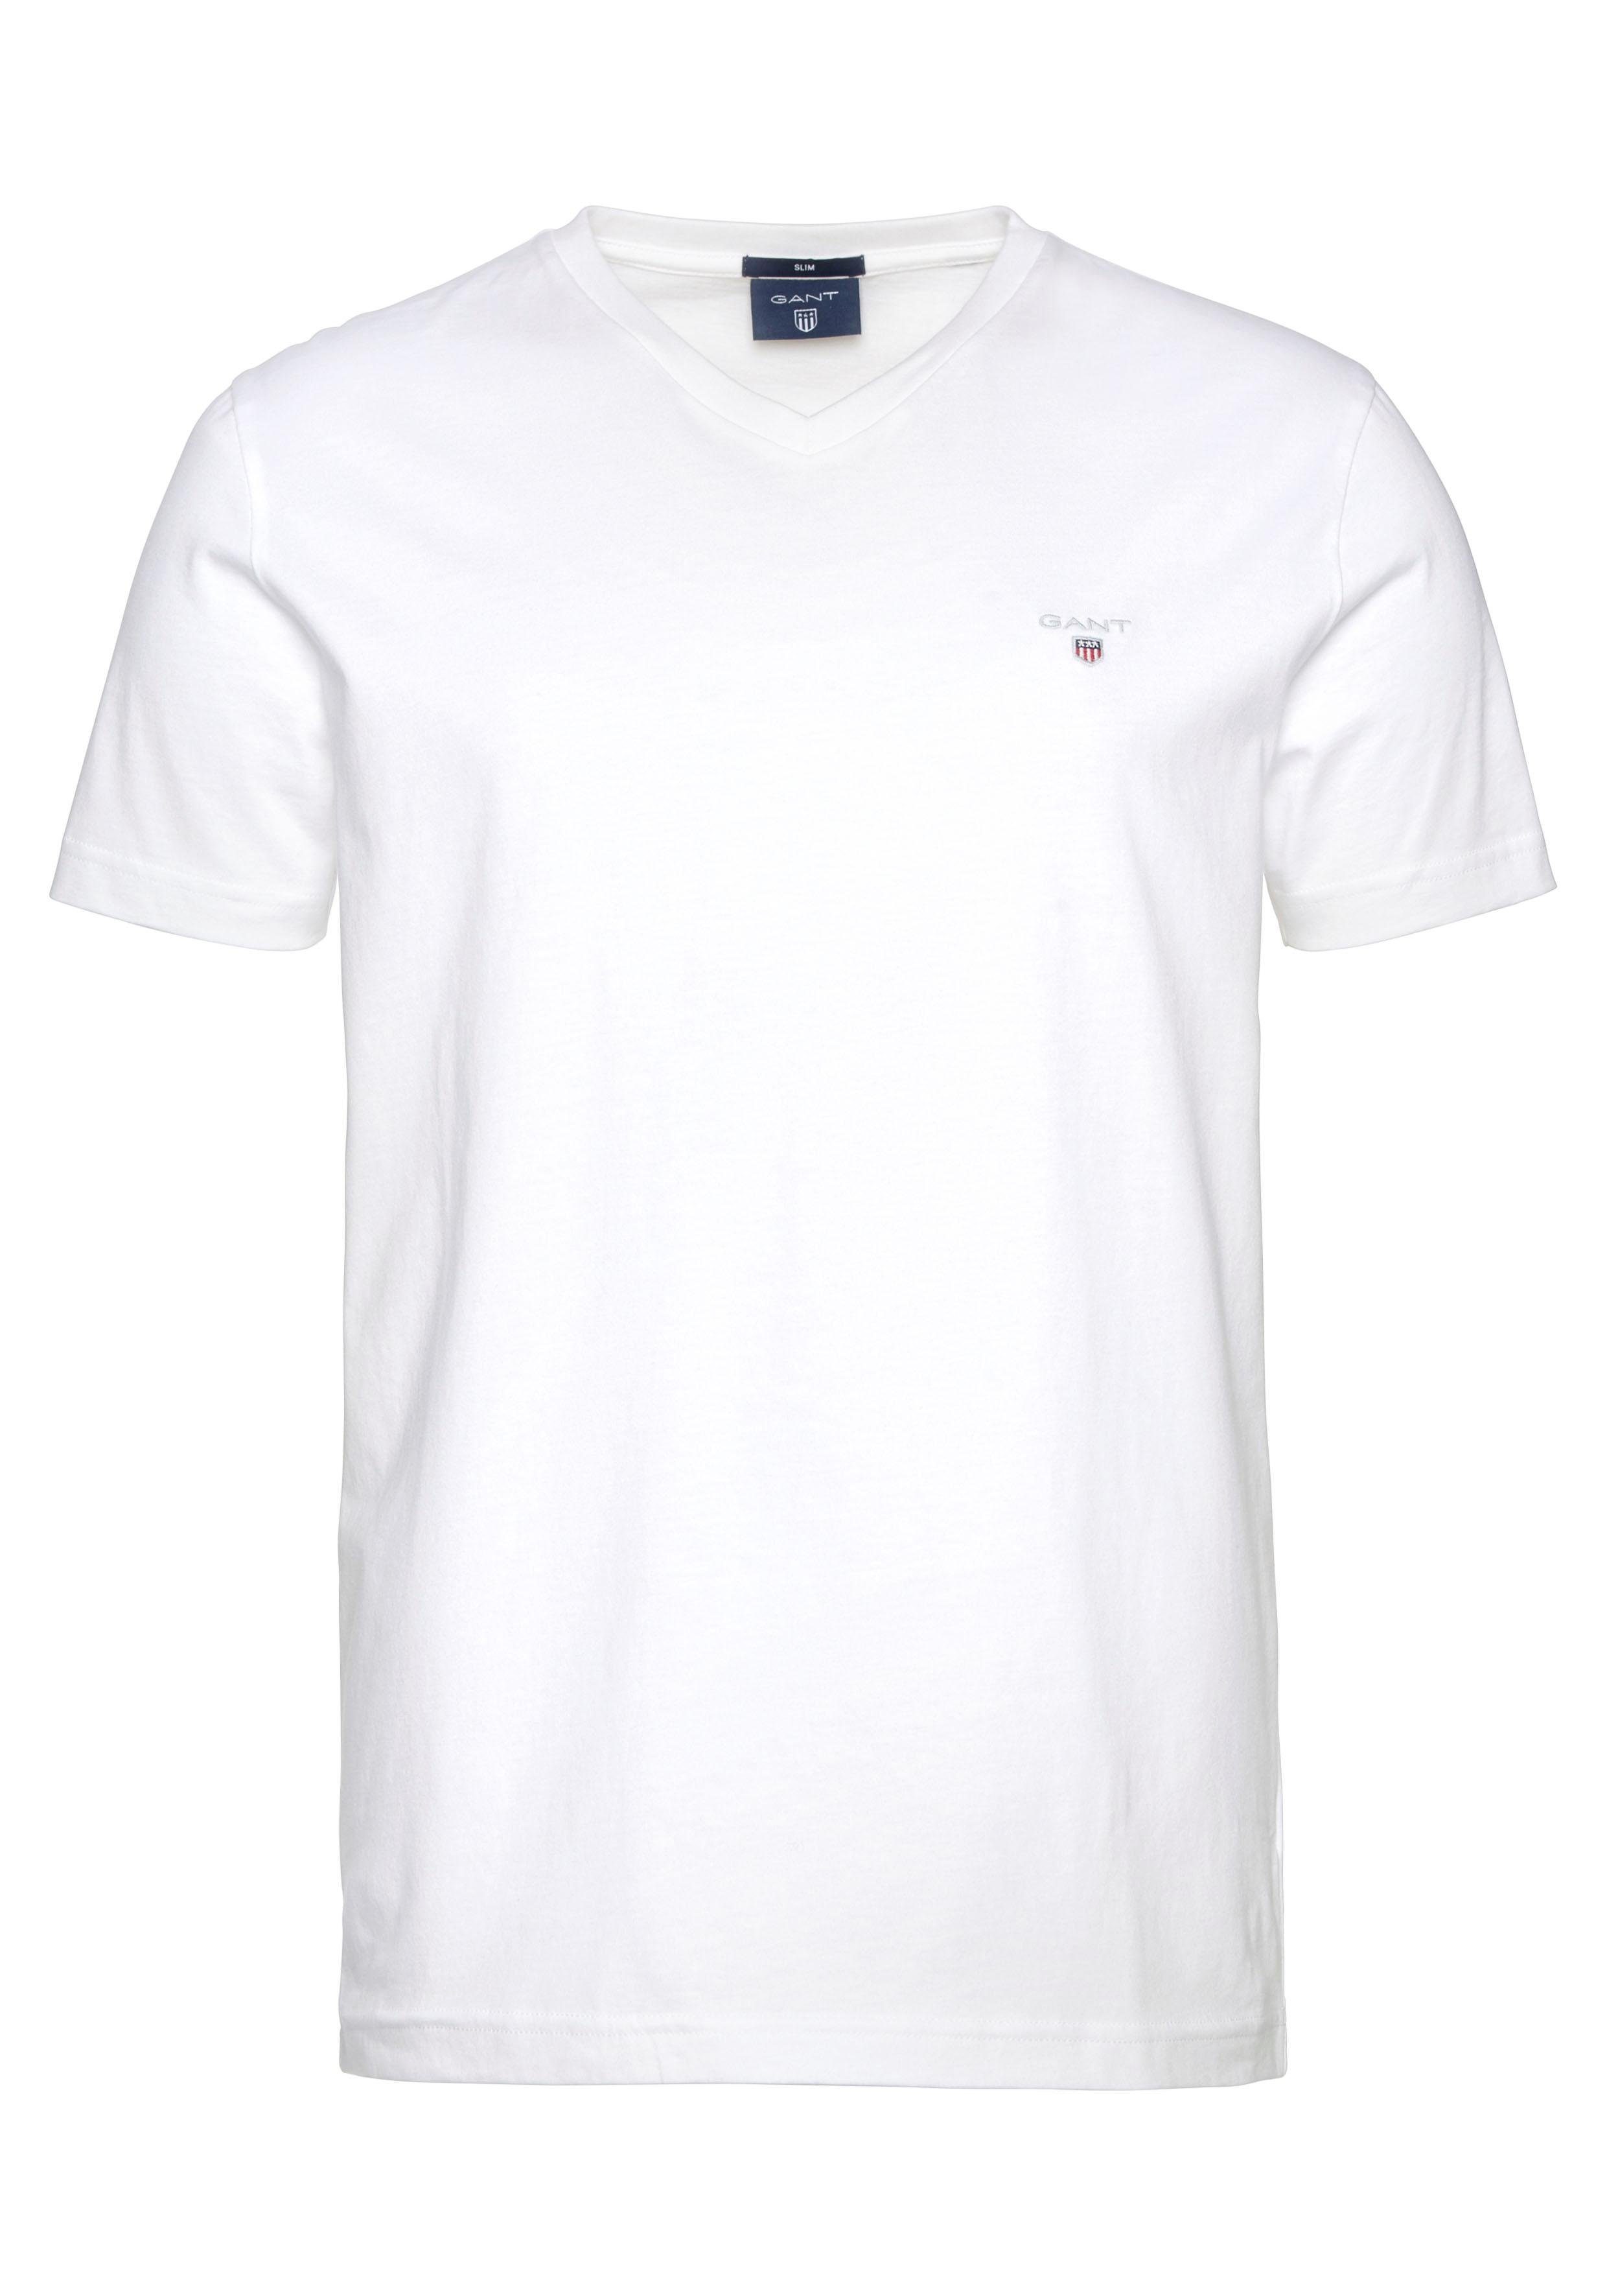 mit Blende V-Shirt white Gant